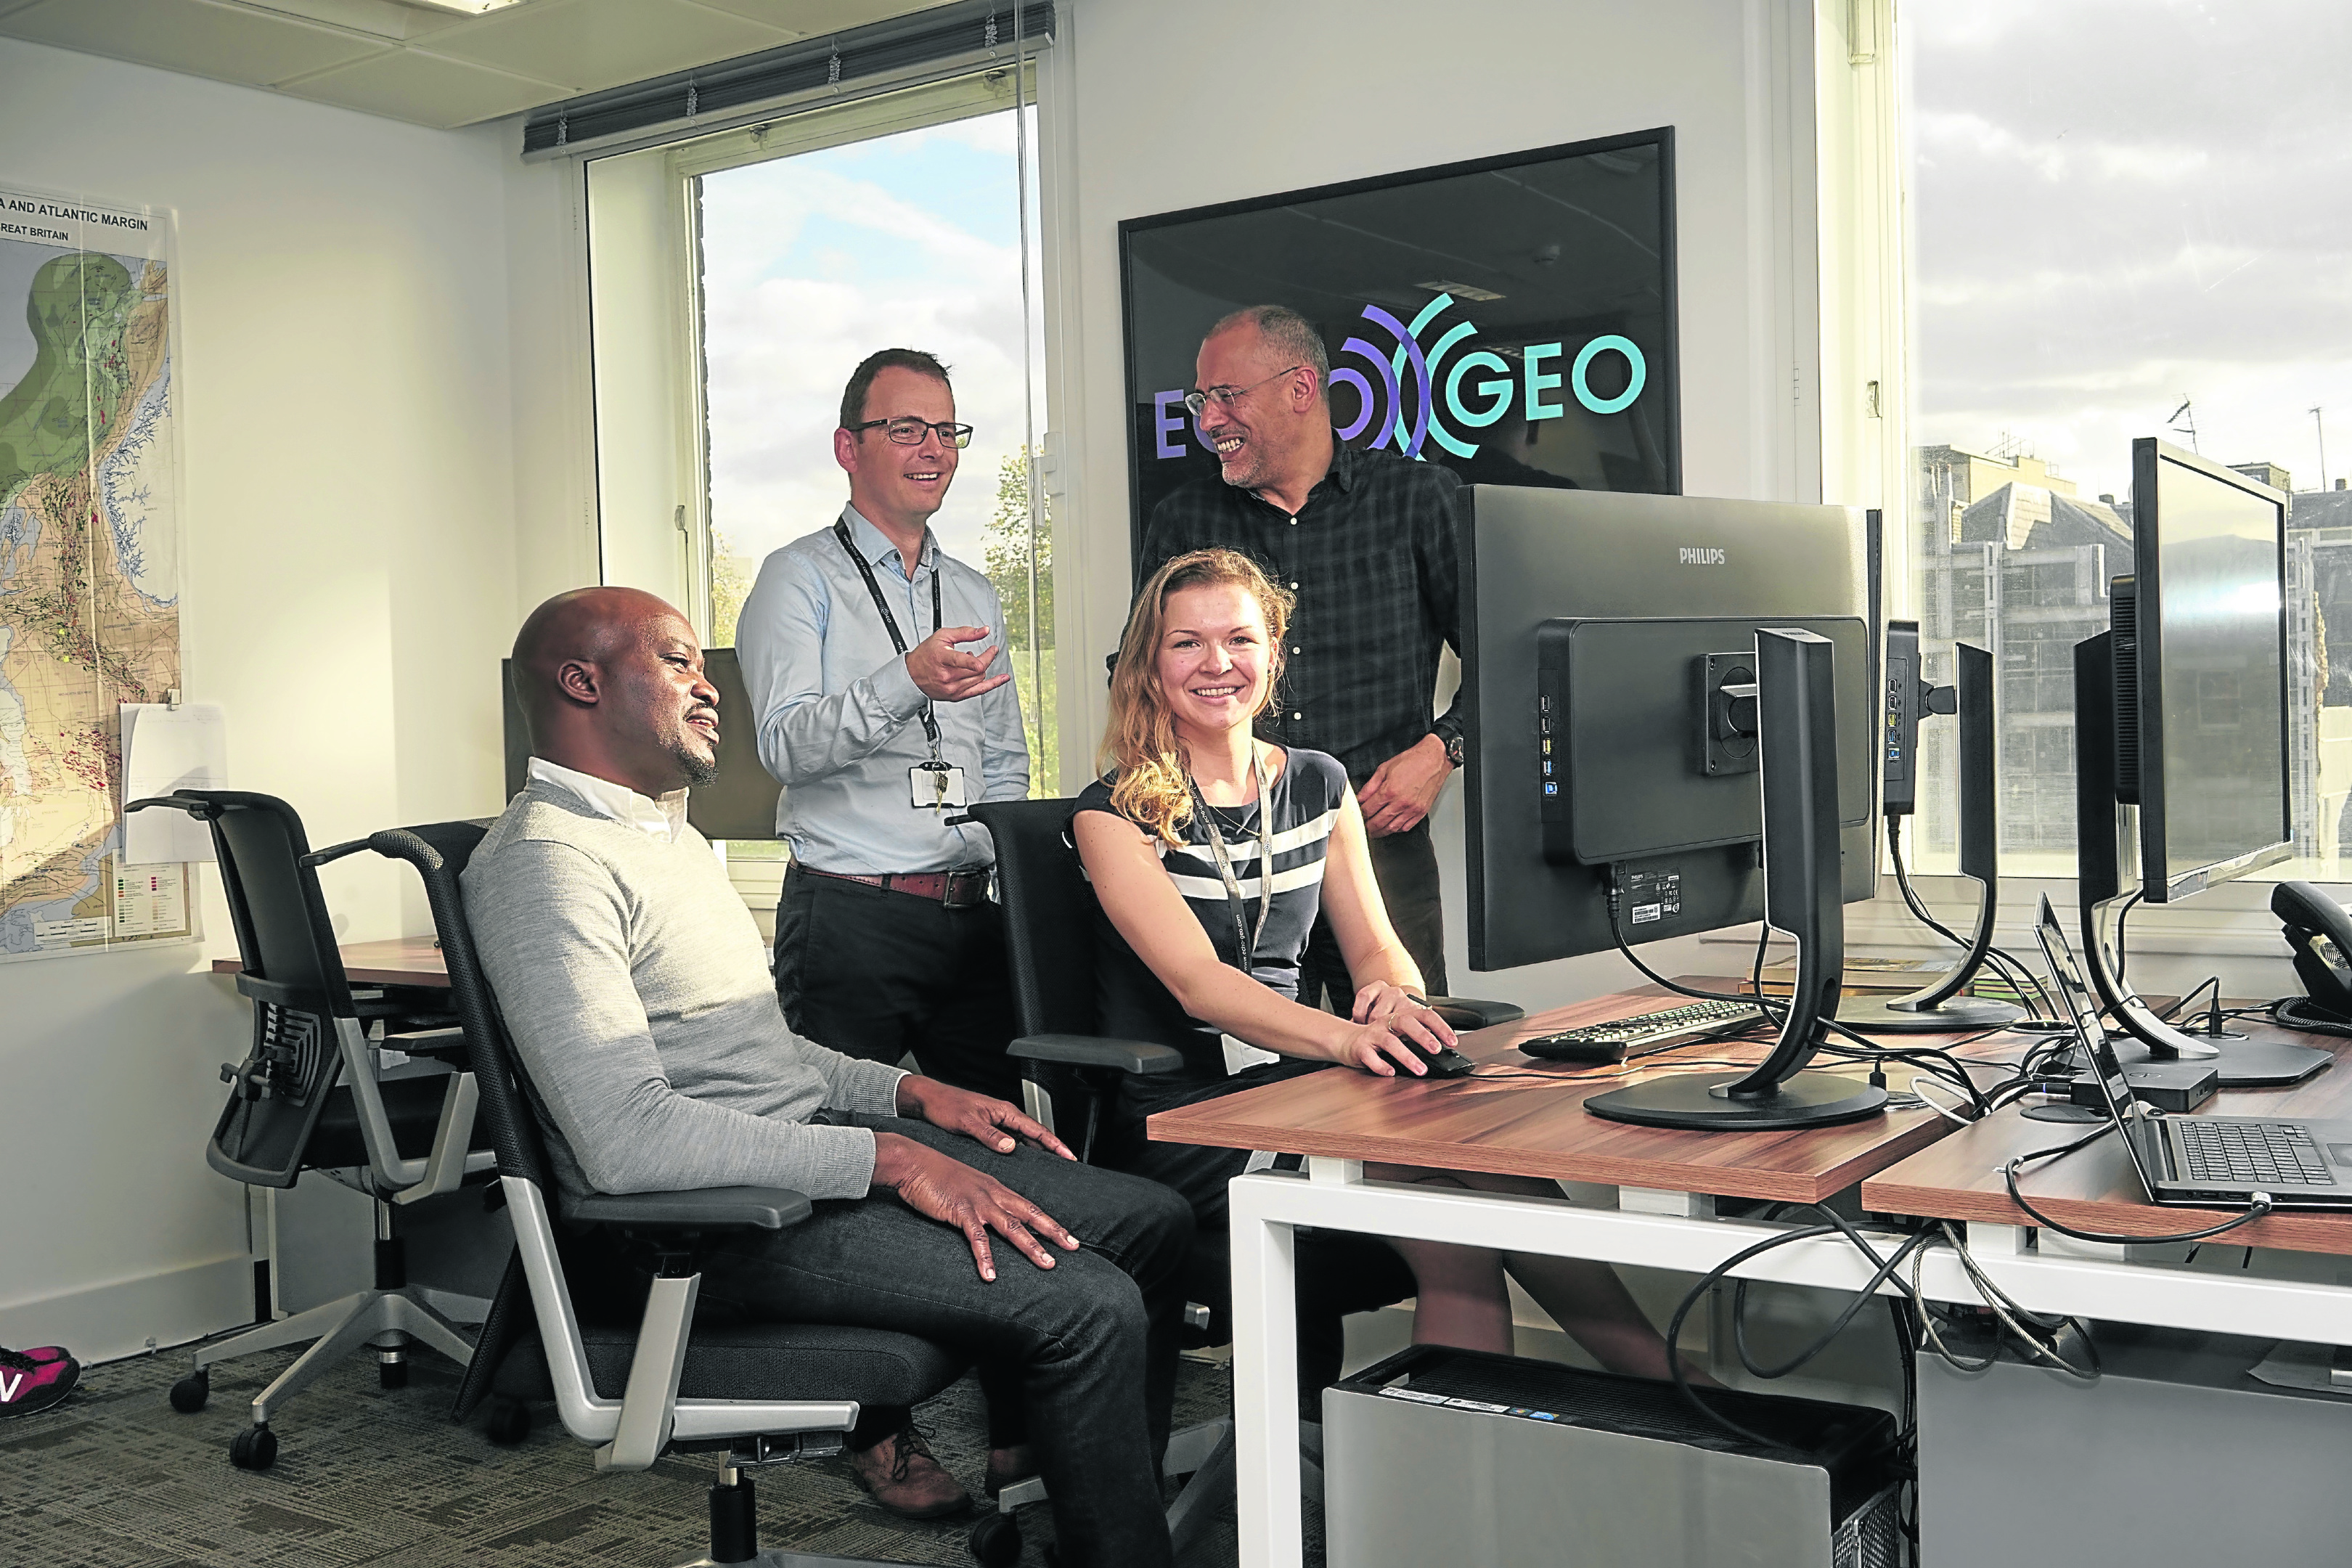 Richard Hiney, managing director of Echo Geo (standing left)
Eddine Bellatreche, geophysics advisor (standing right)
Anthony Avu, geophysics advisor (seated left)
Sarka Hlavackova, associate geoscientist (seated right)